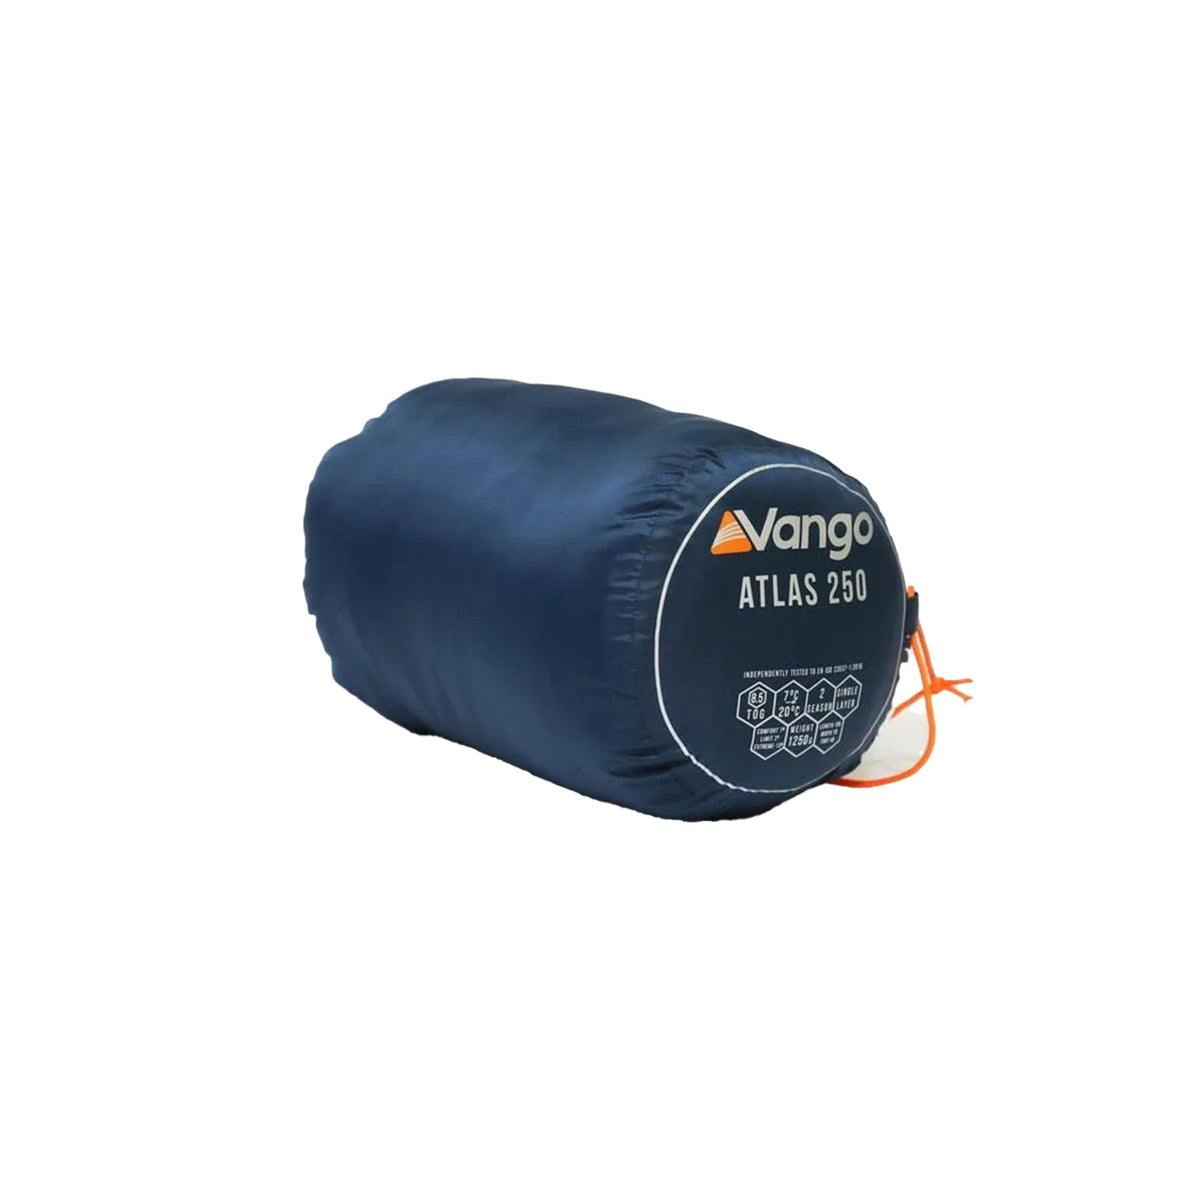 Vango Atlas 250 Sleeping Bag 